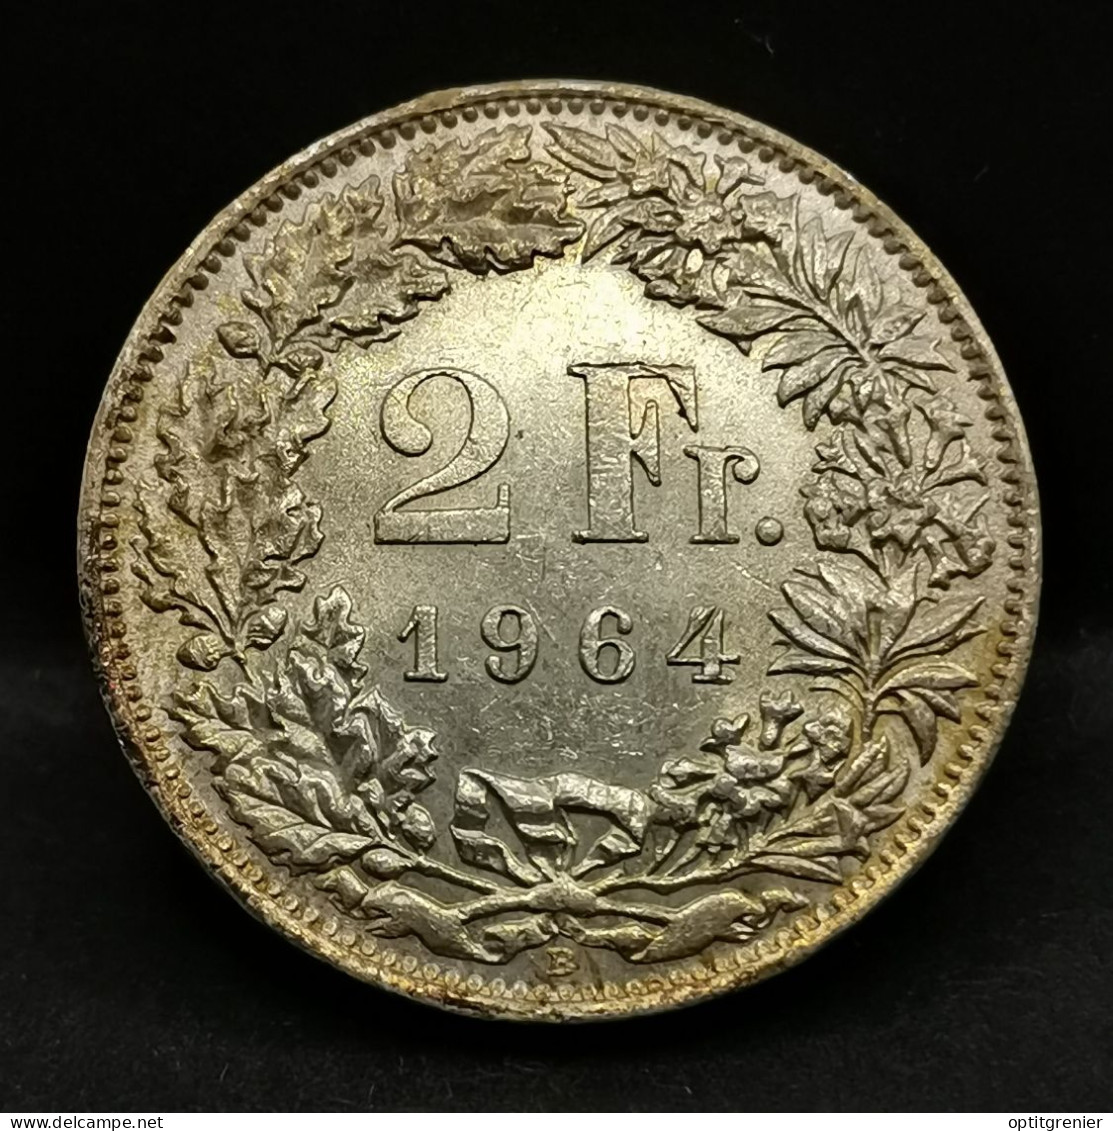 2 FRANCS SUISSE ARGENT 1964 B BERNE HELVETIA DEBOUT BELLE PATINE / SWITZERLAND SILVER - 2 Francs